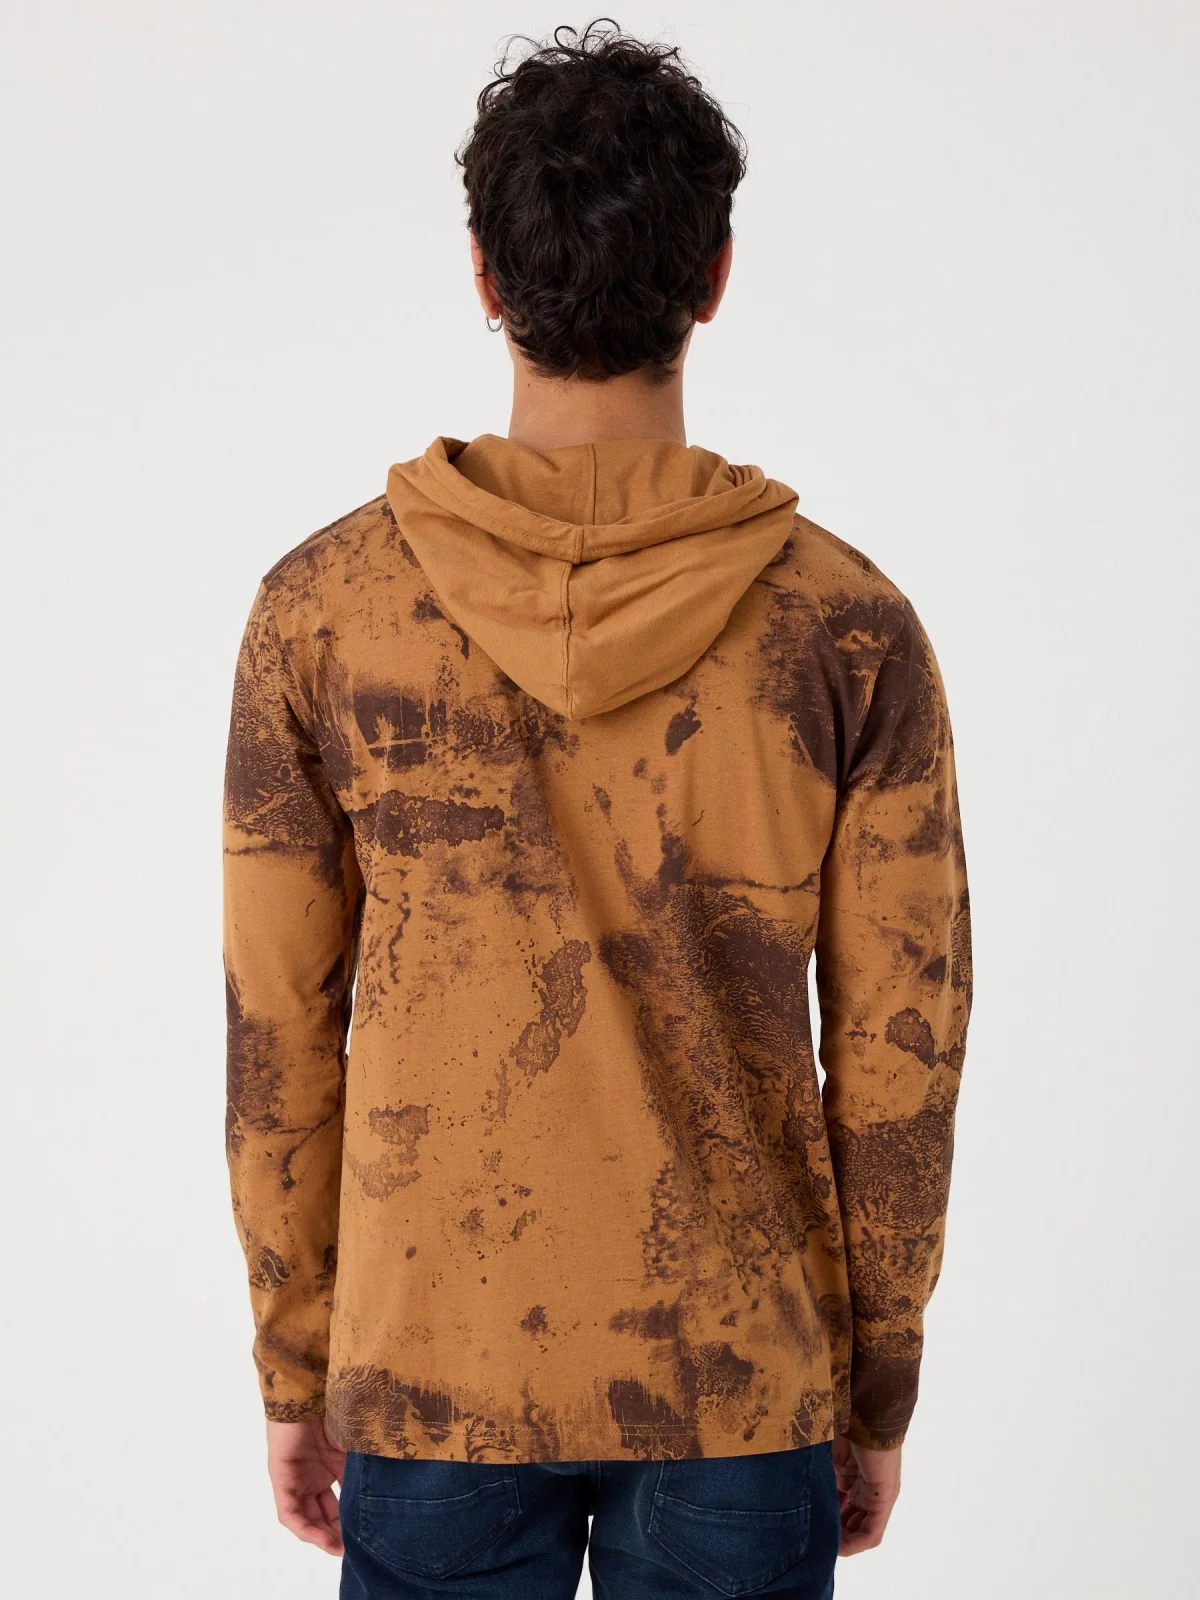 Camiseta estampada capucha ajustable marrón vista media trasera